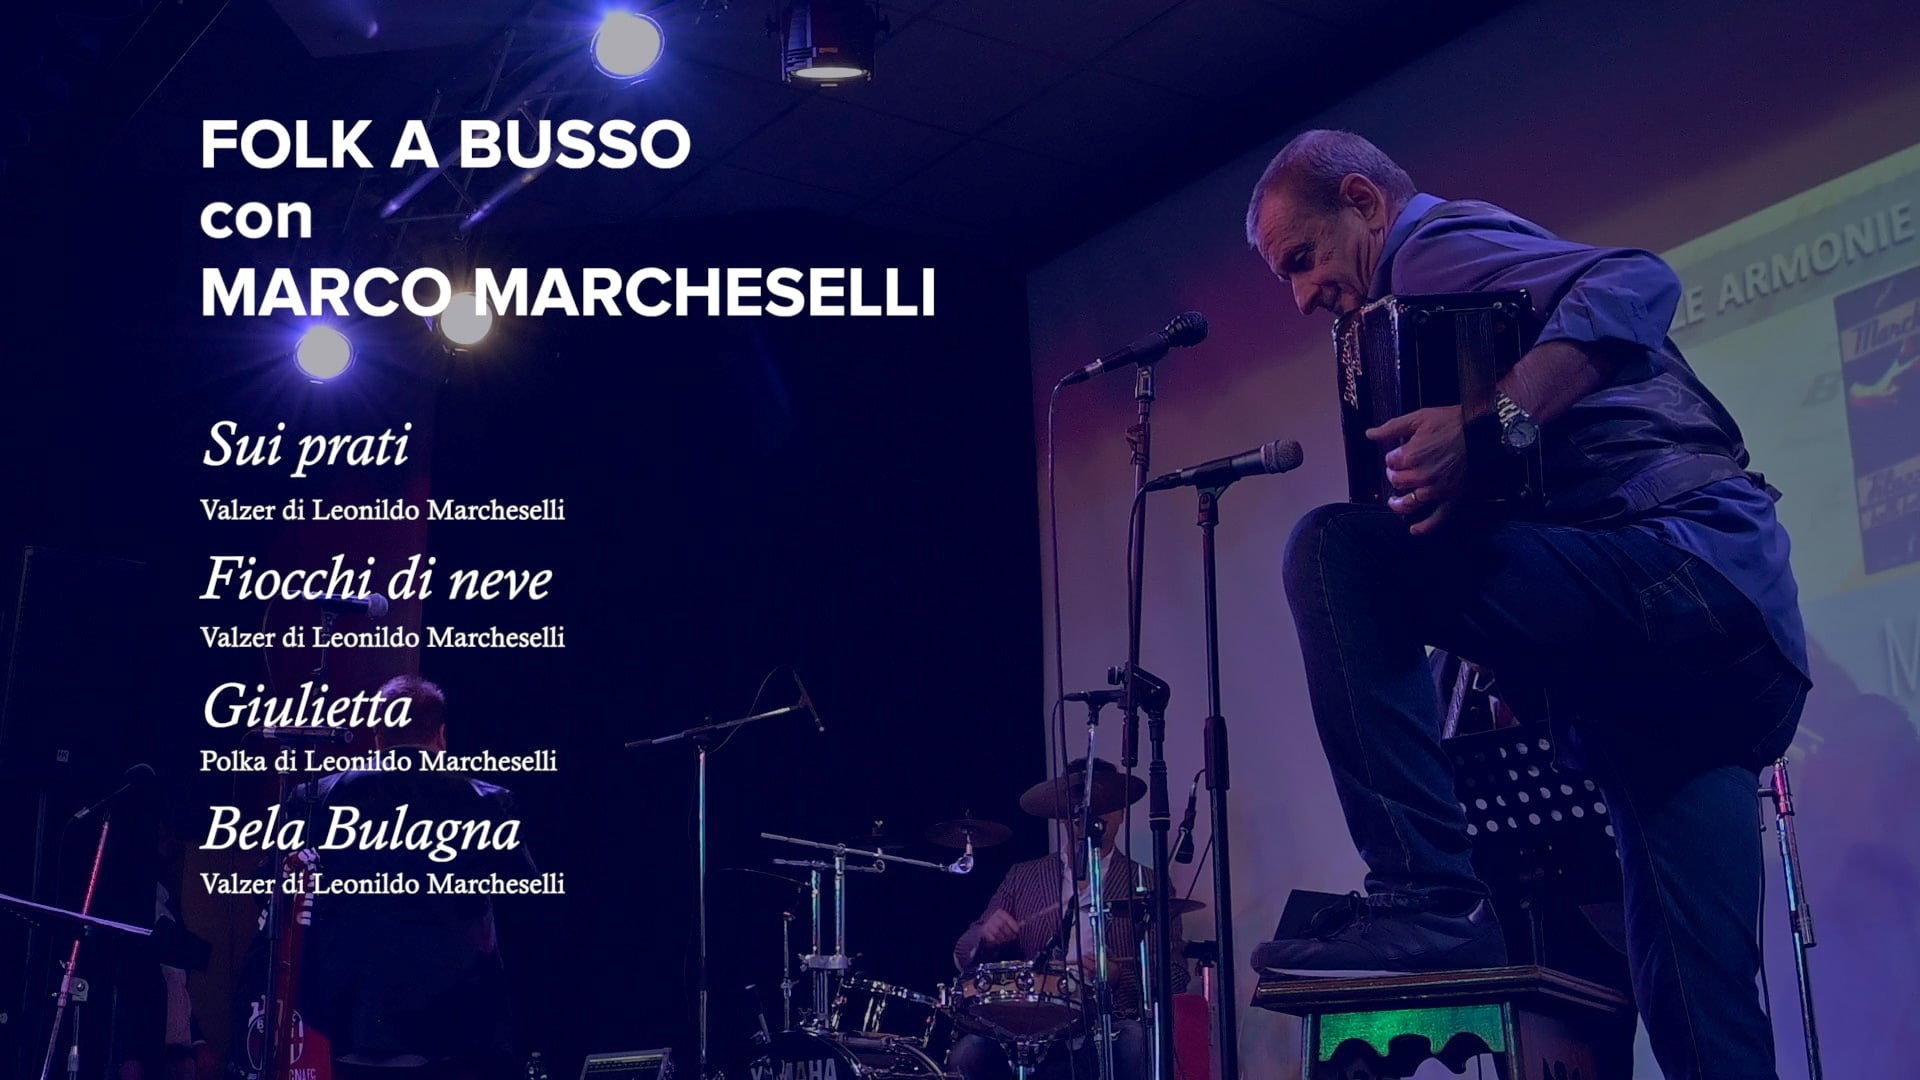 Folk a Busso con Marco Marcheselli on Vimeo